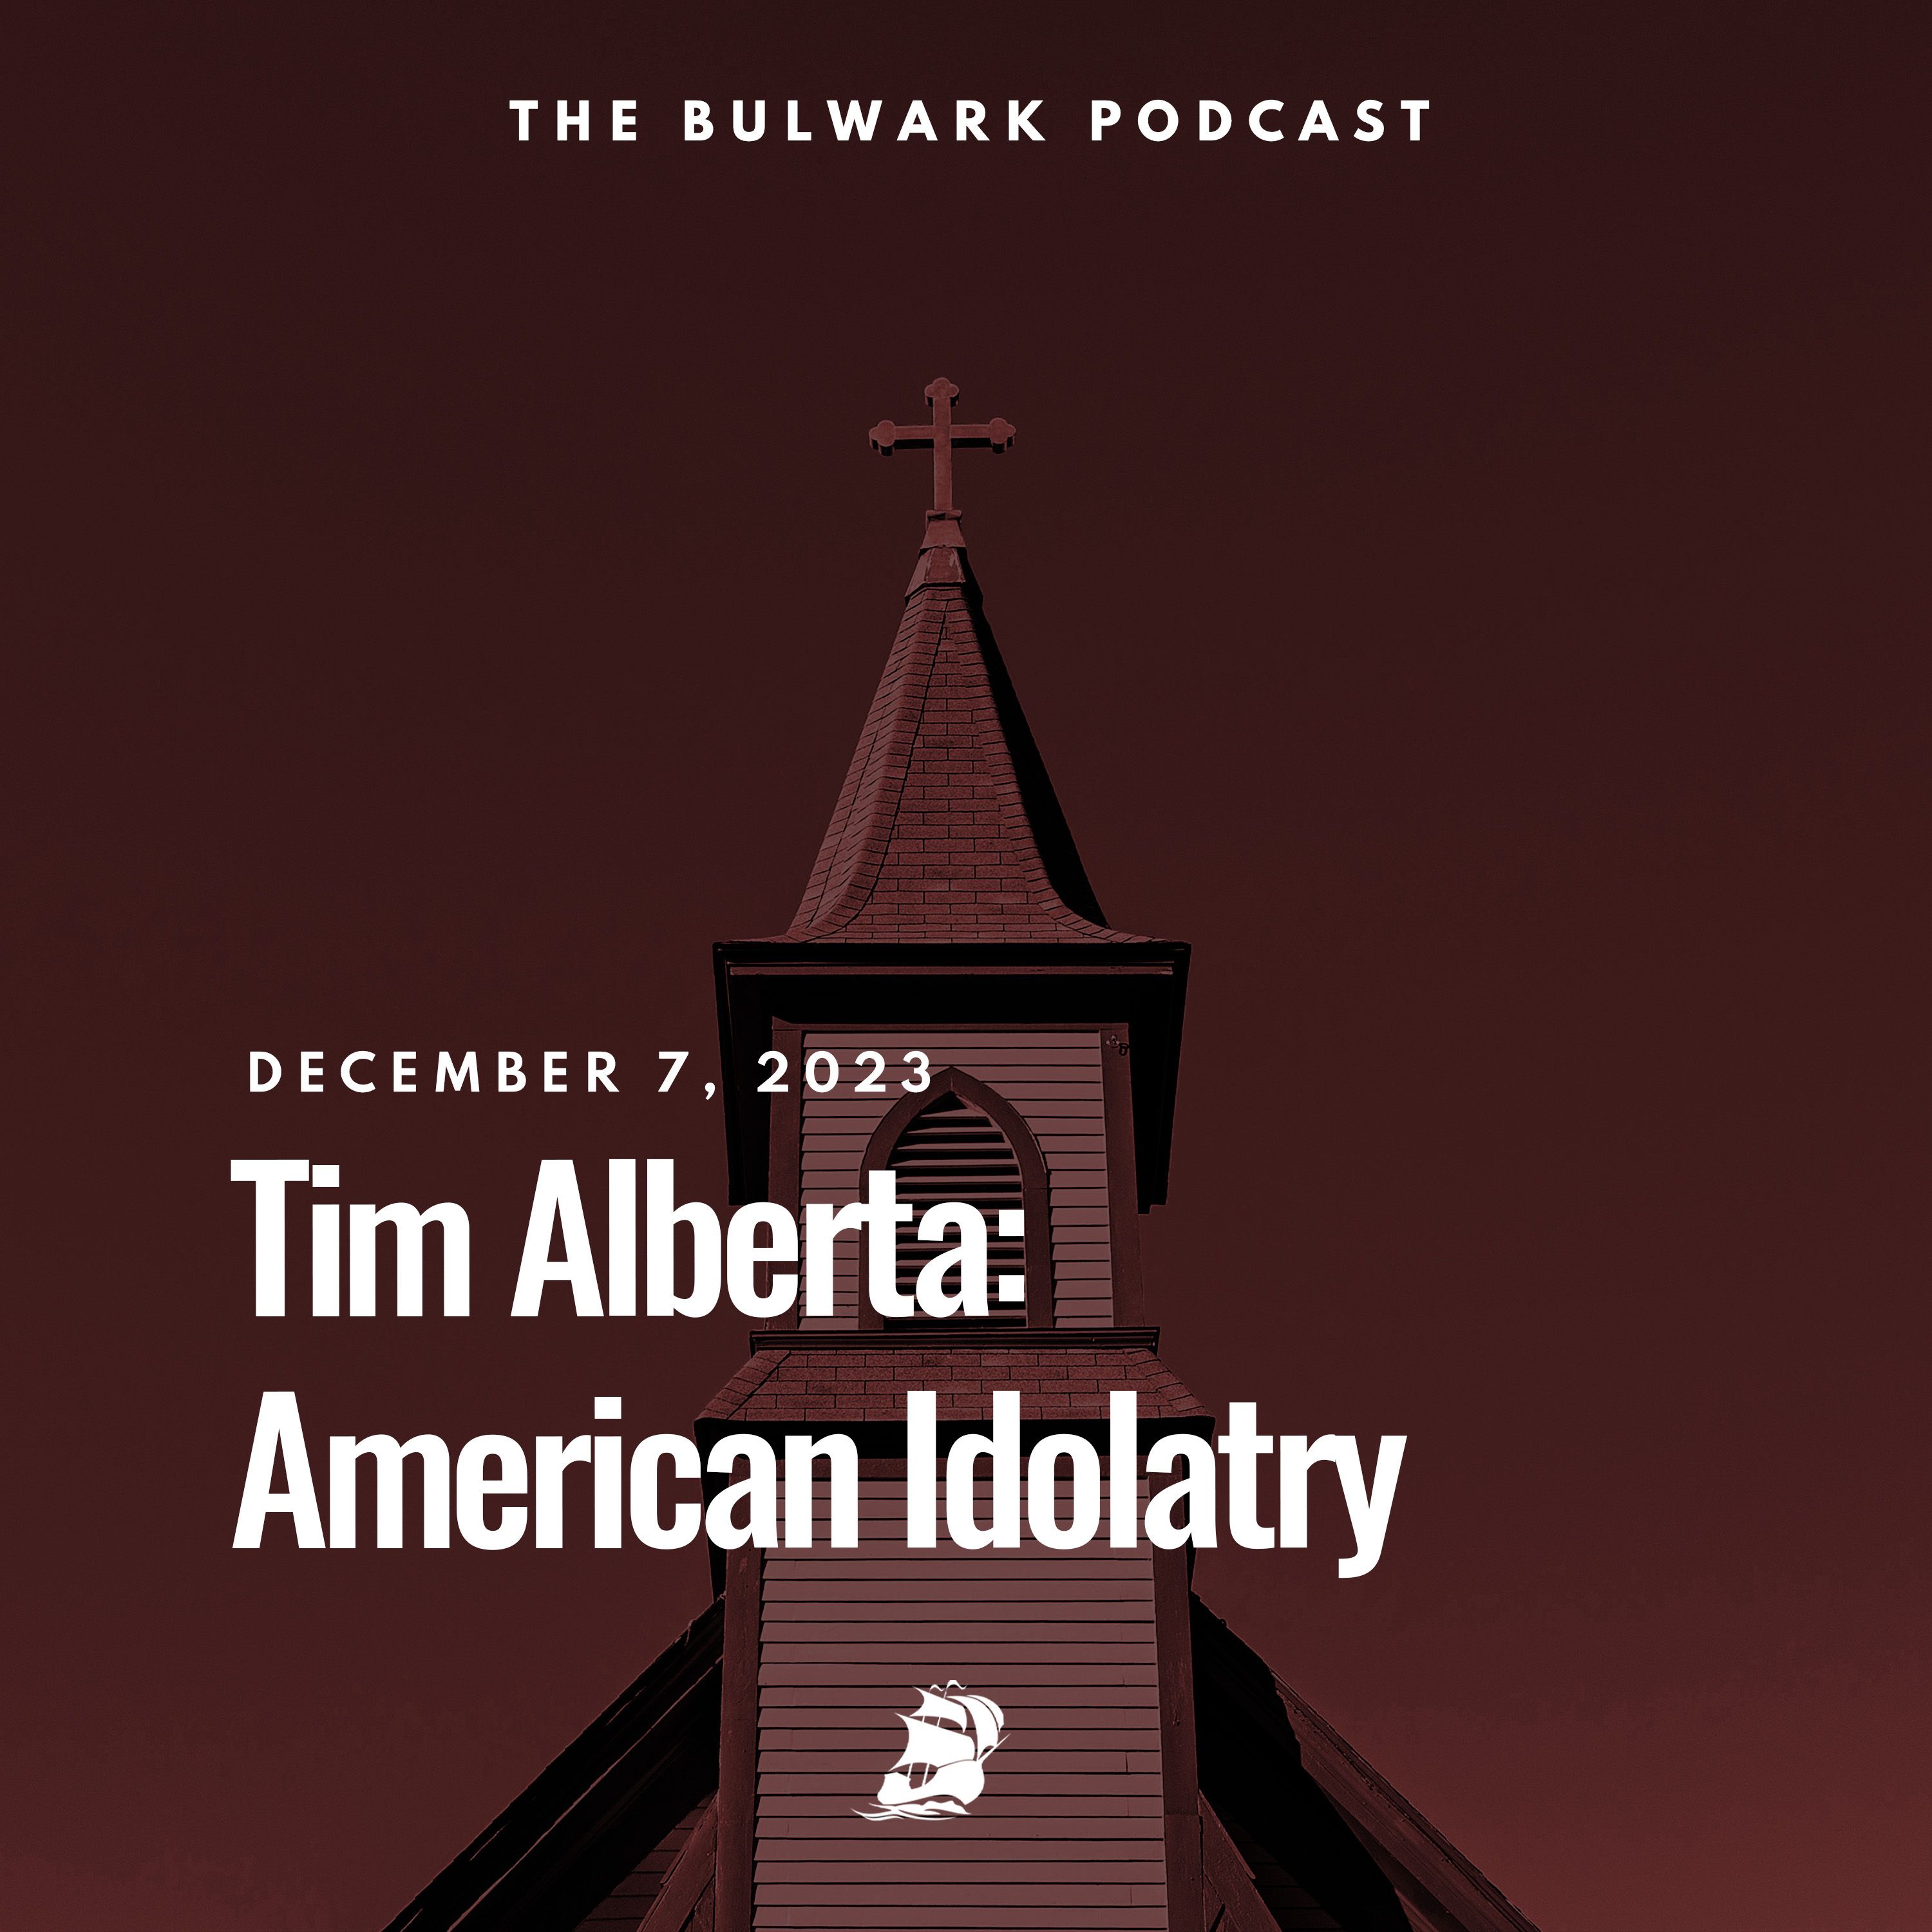 Tim Alberta: American Idolatry by The Bulwark Podcast